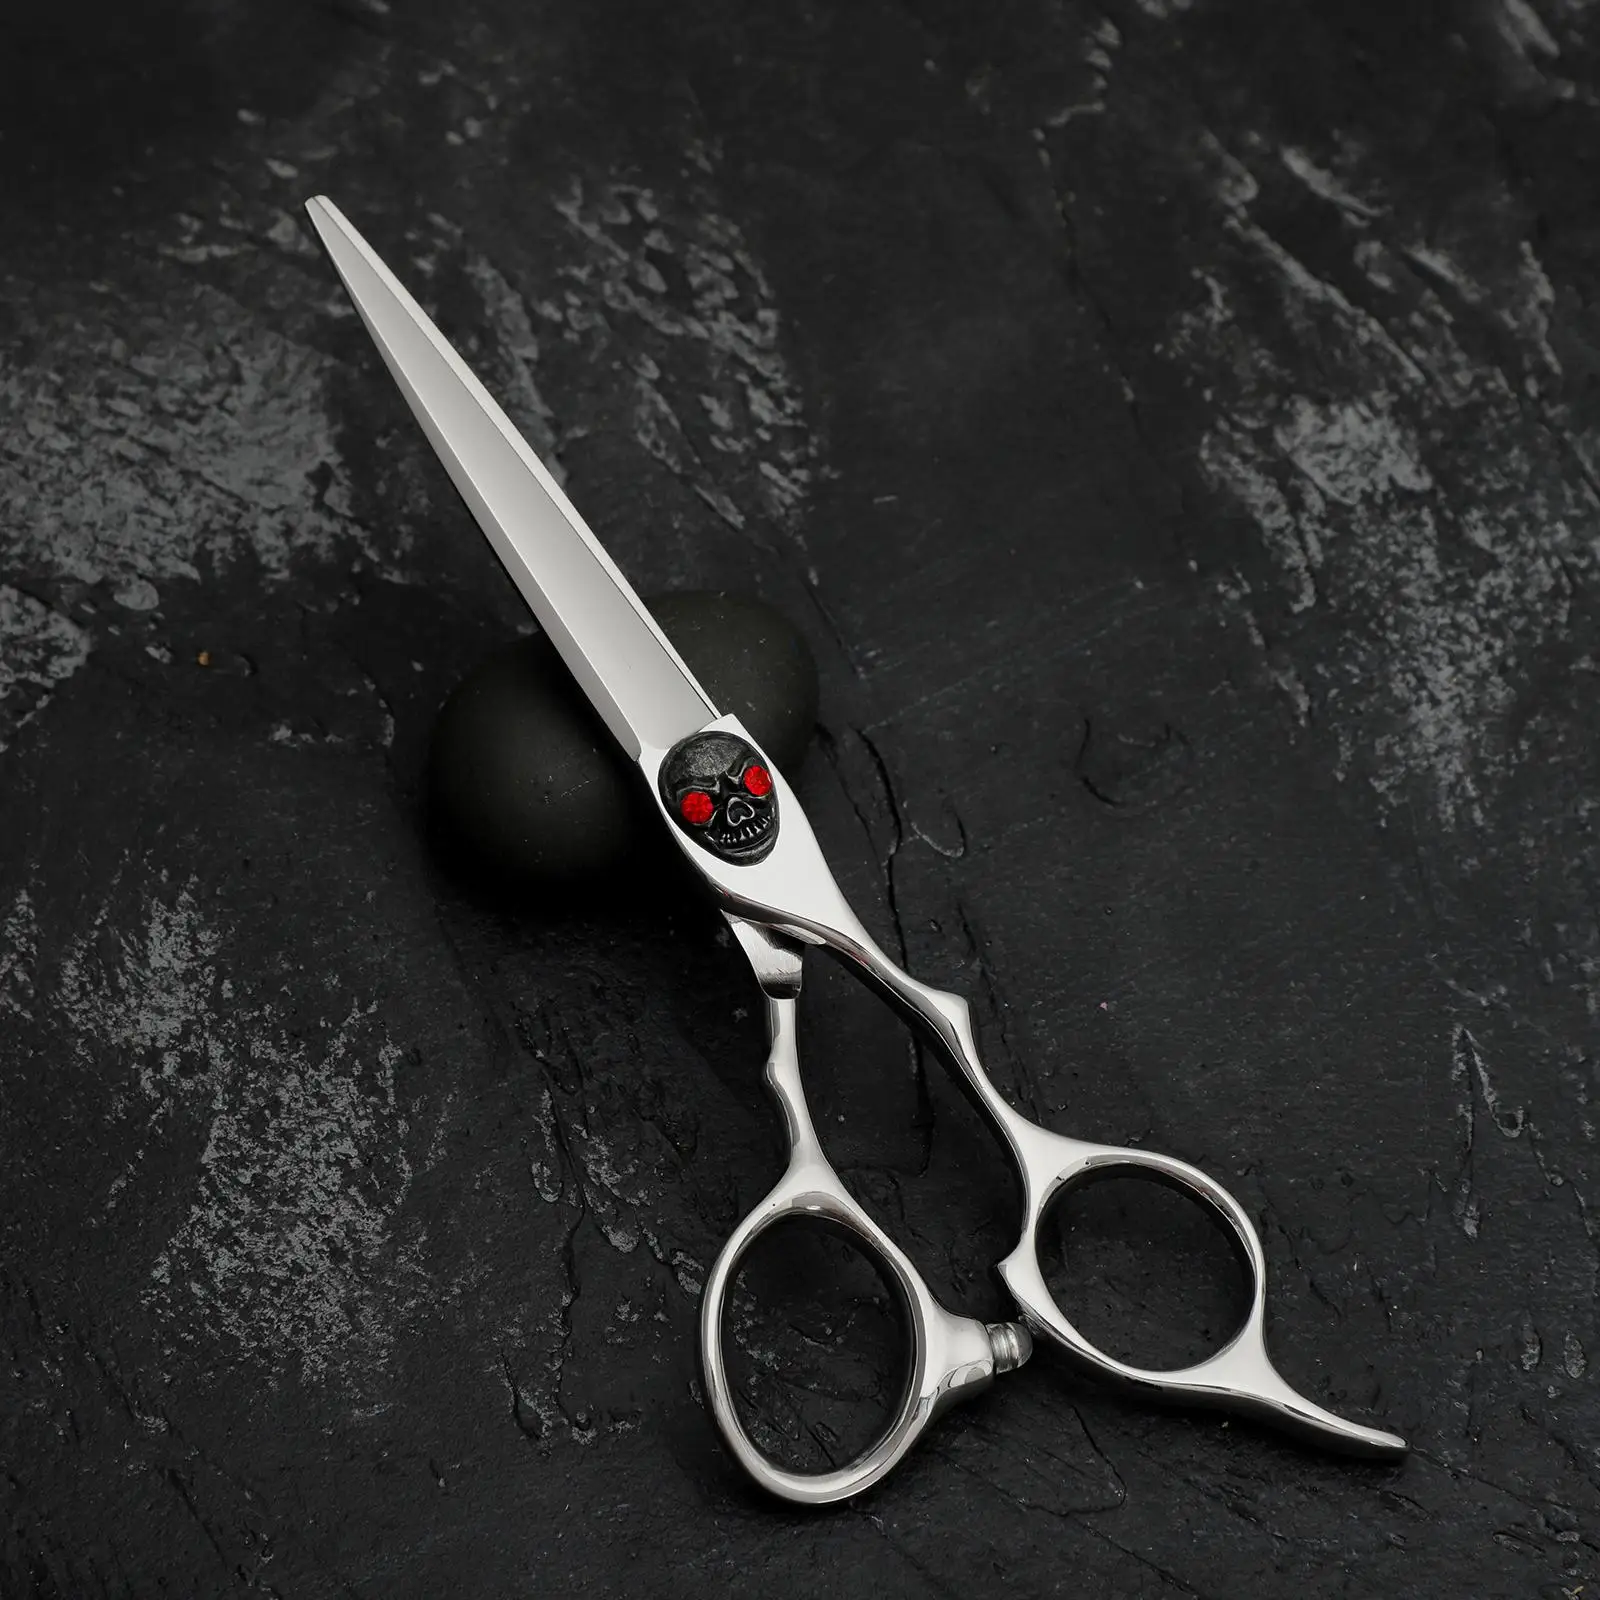 Stainless Steel Hair Cutting Scissors Sharp Haircut Professional Salon Barber Thinning Shears for Kids Hairstylist Women Men